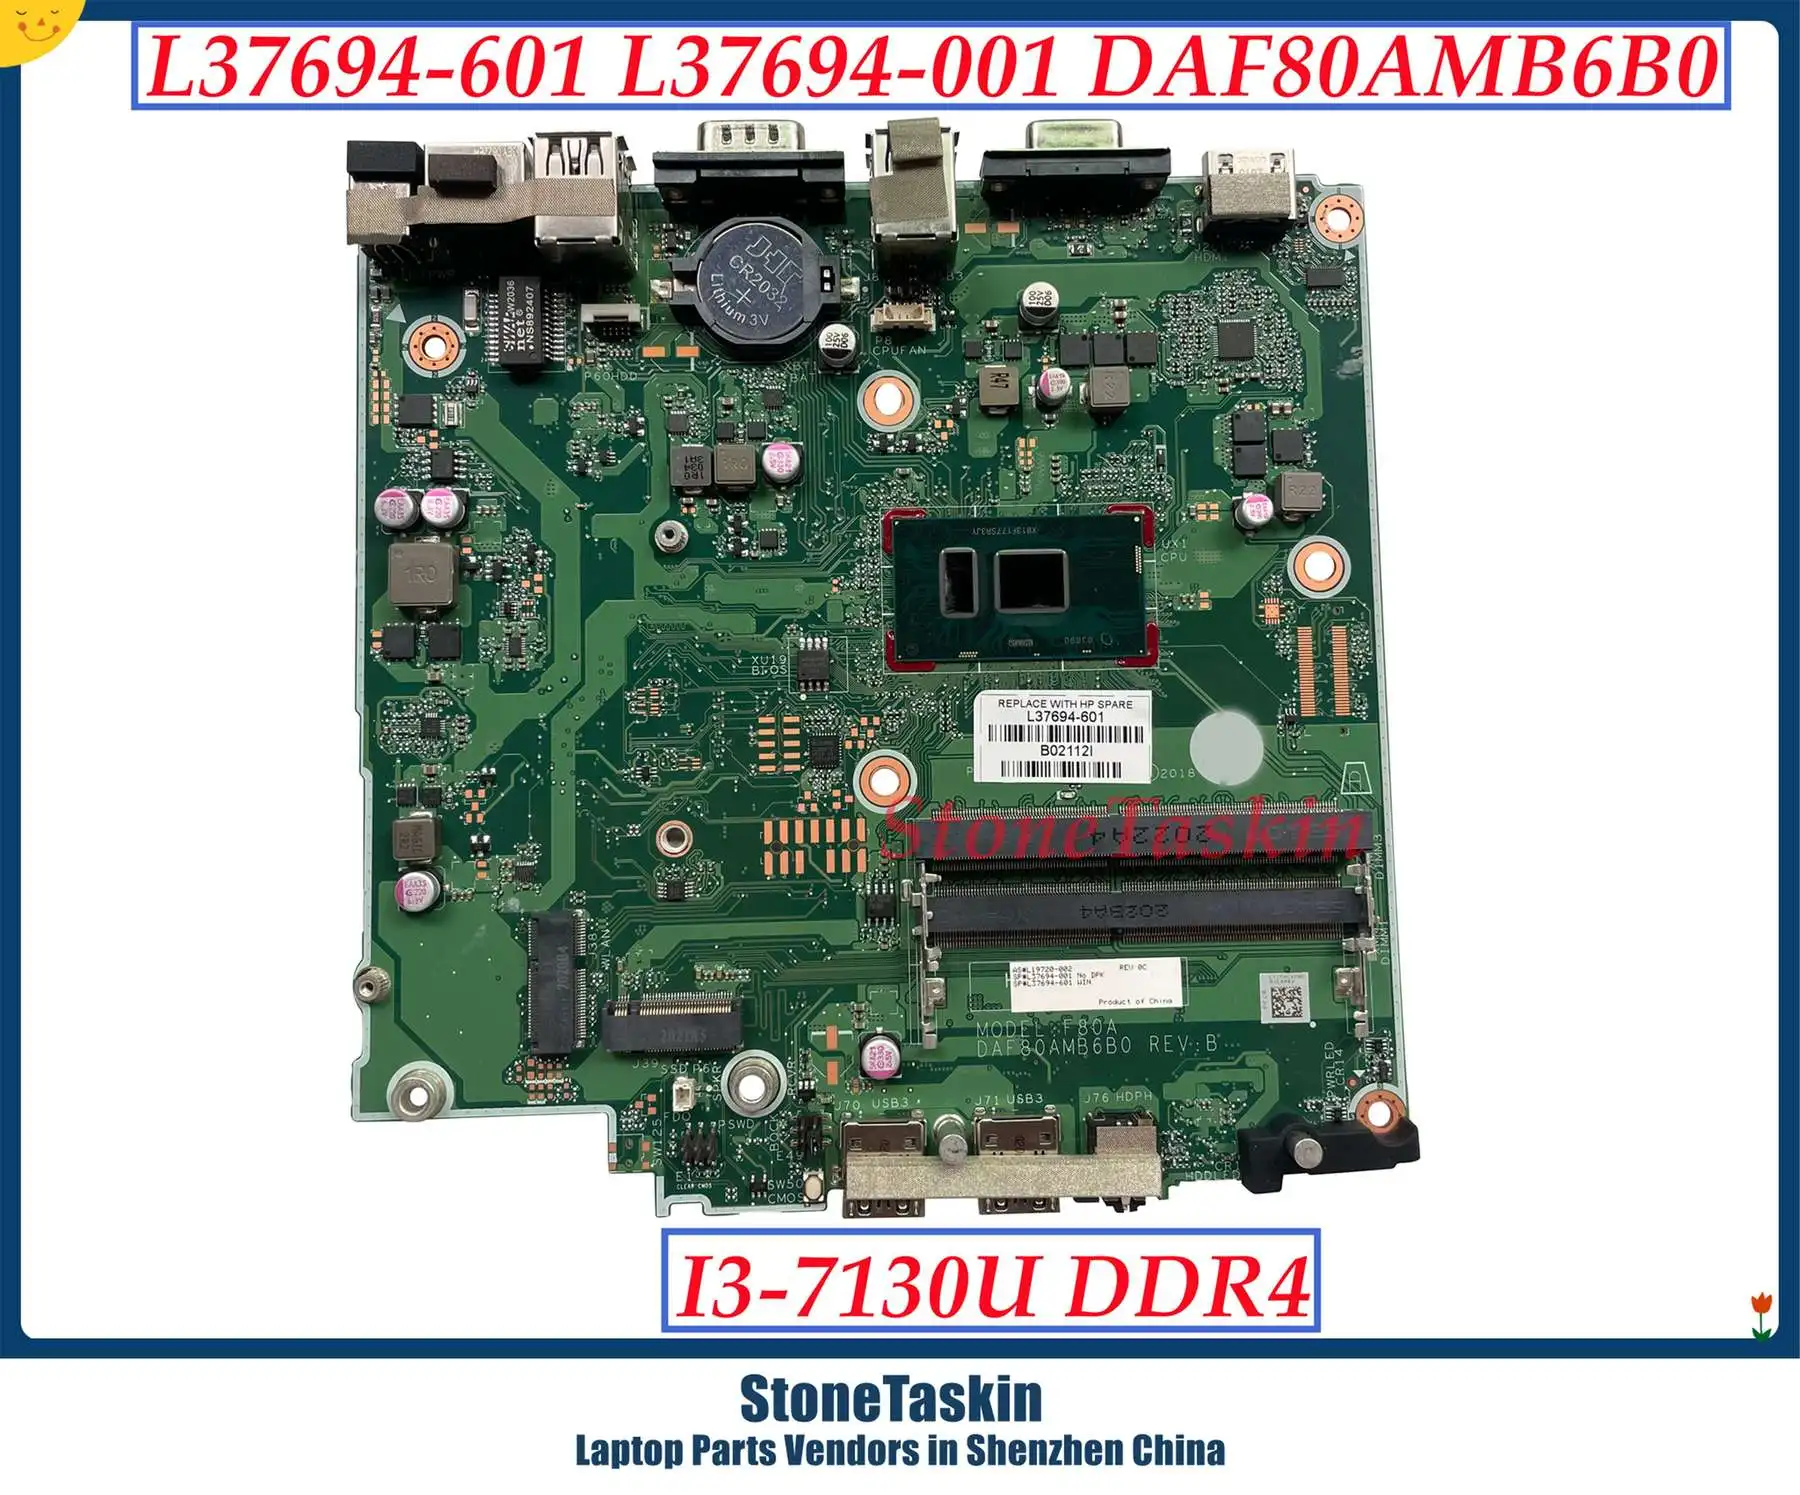 StoneTaskin L37694-601 L37694-001 HP 260G3 DM Asztali Alaplap DAF80AMB6B0 I3-7130U DDR4 MB alaplap 100% - Ban Tesztelt